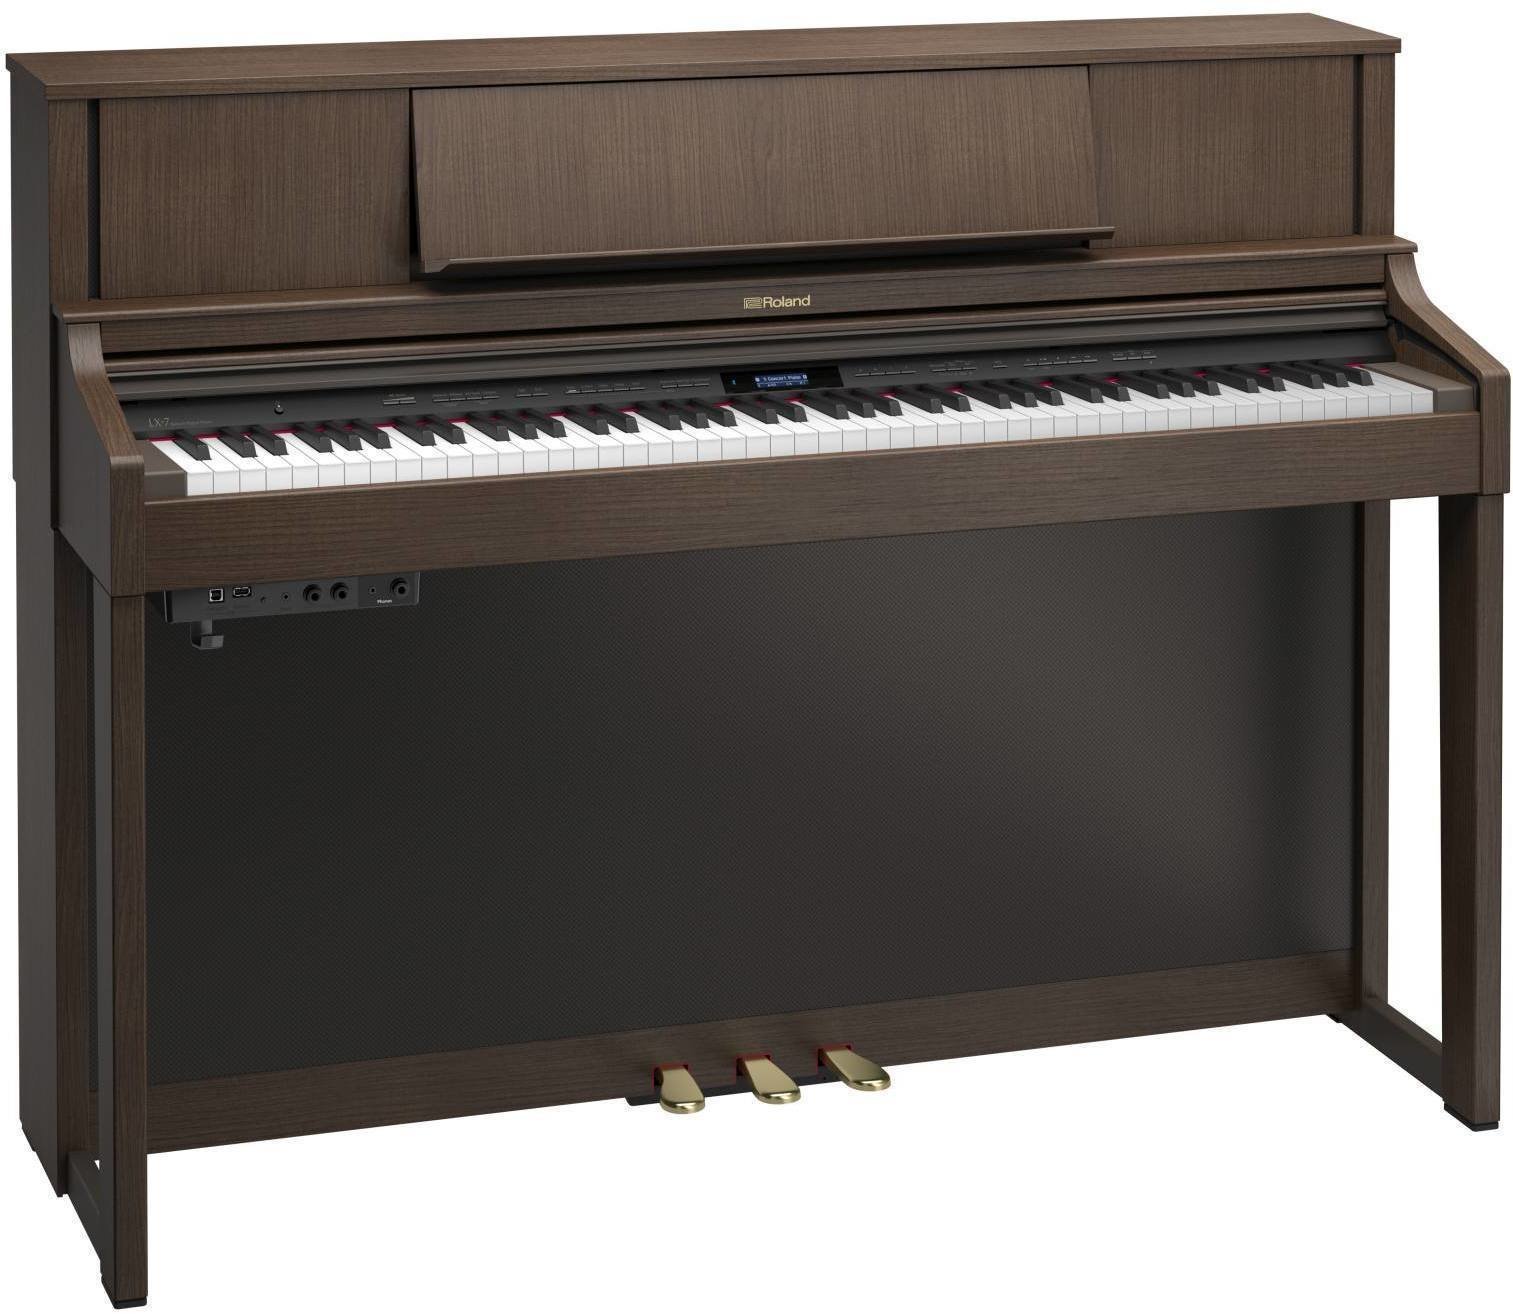 Piano digital Roland LX-7 BW